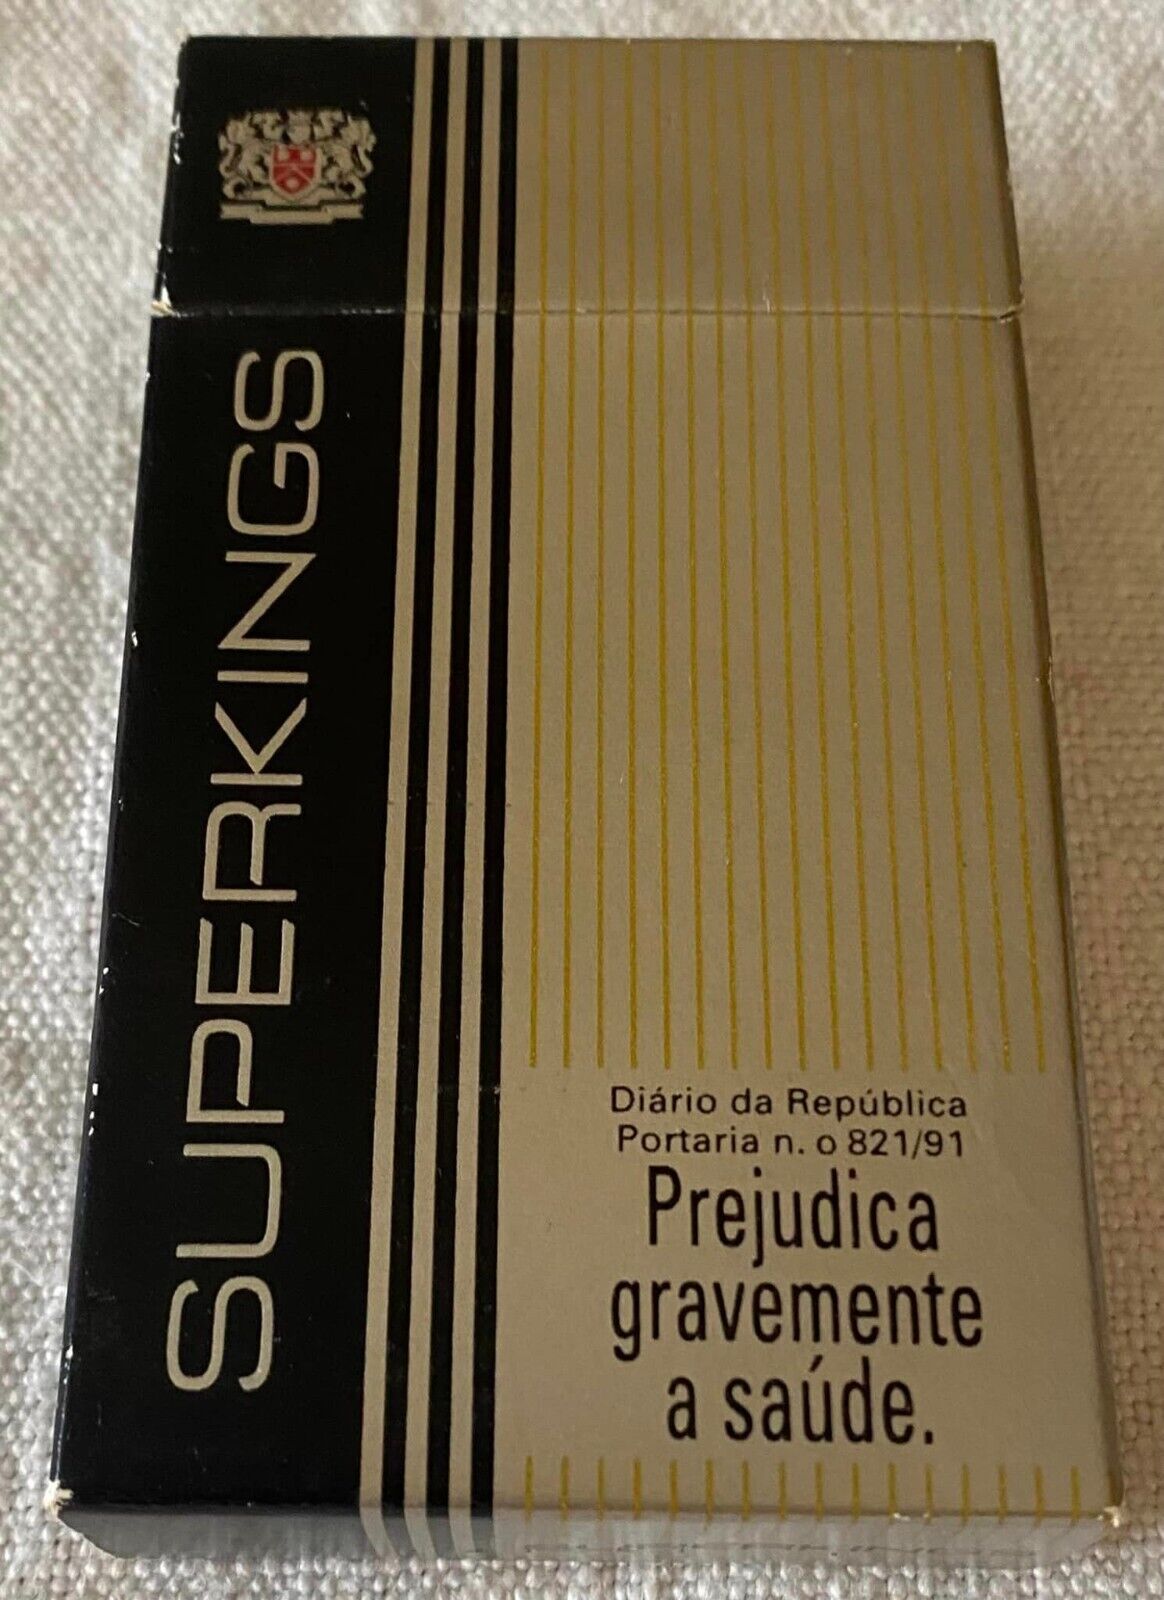 Vintage Superkings Cigarette Cigarettes Cigarette Paper Box Empty Cigarette Pack